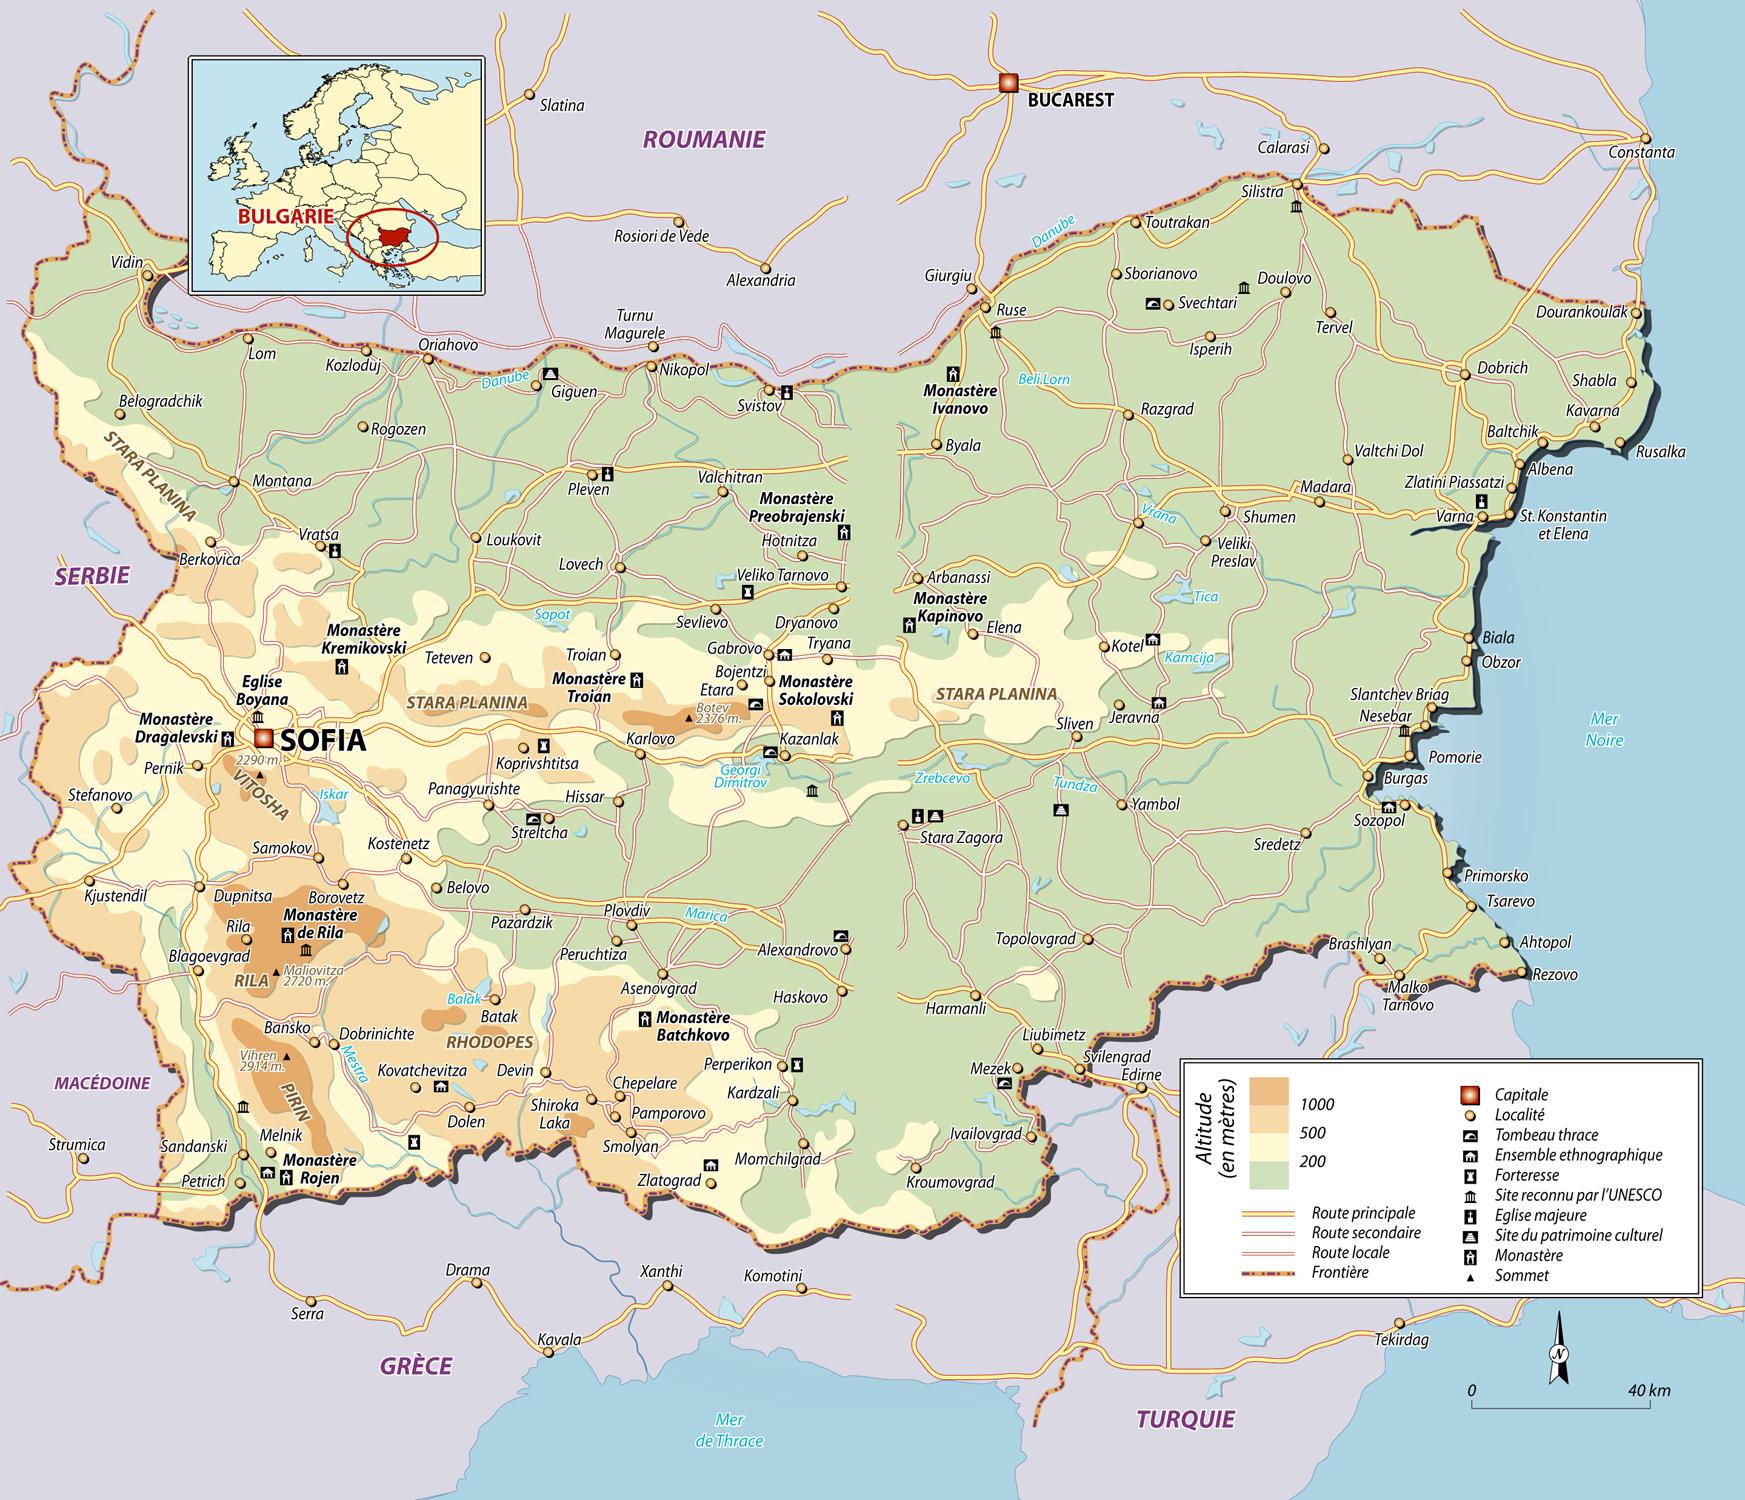 bulgarie-carte